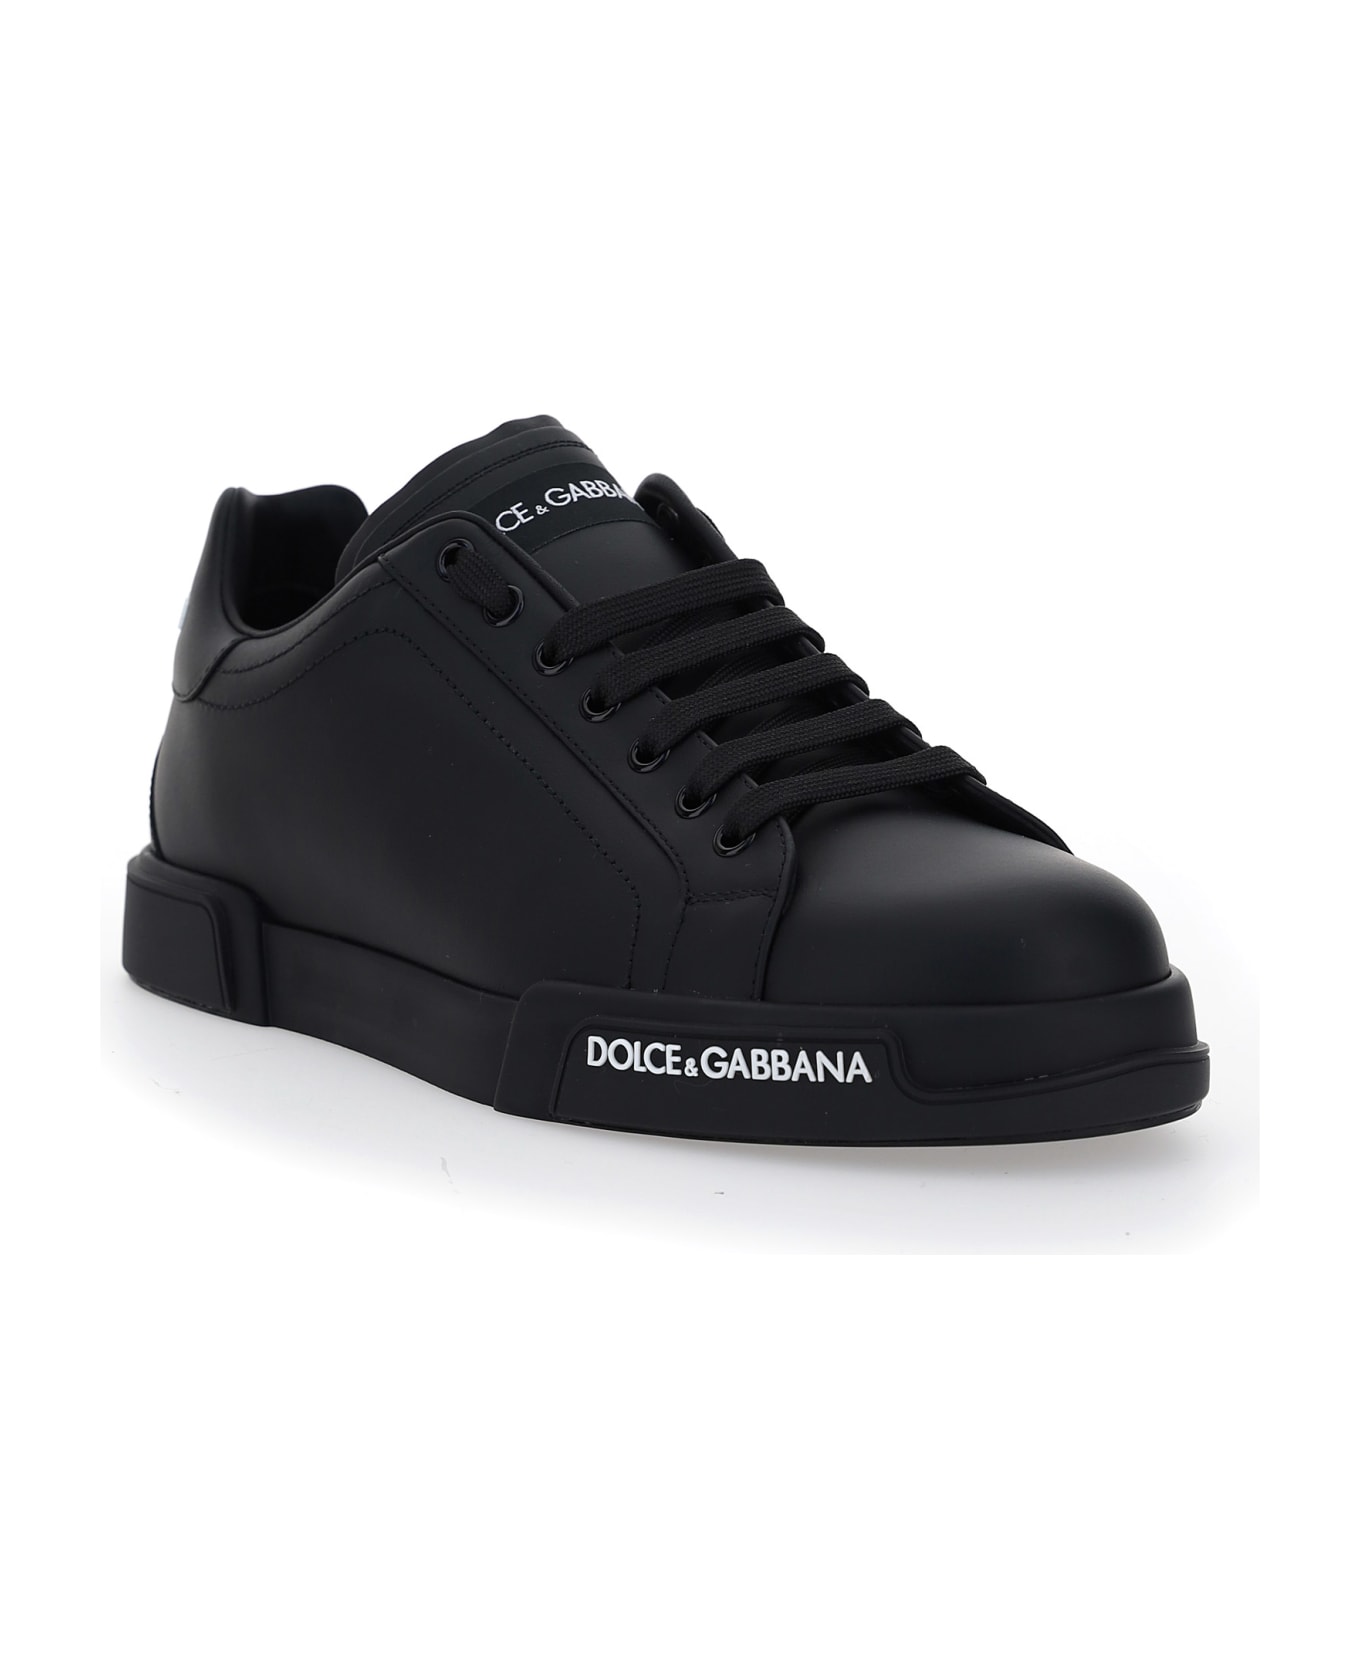 Dolce & Gabbana Portofino Black Leather Sneakers - Black